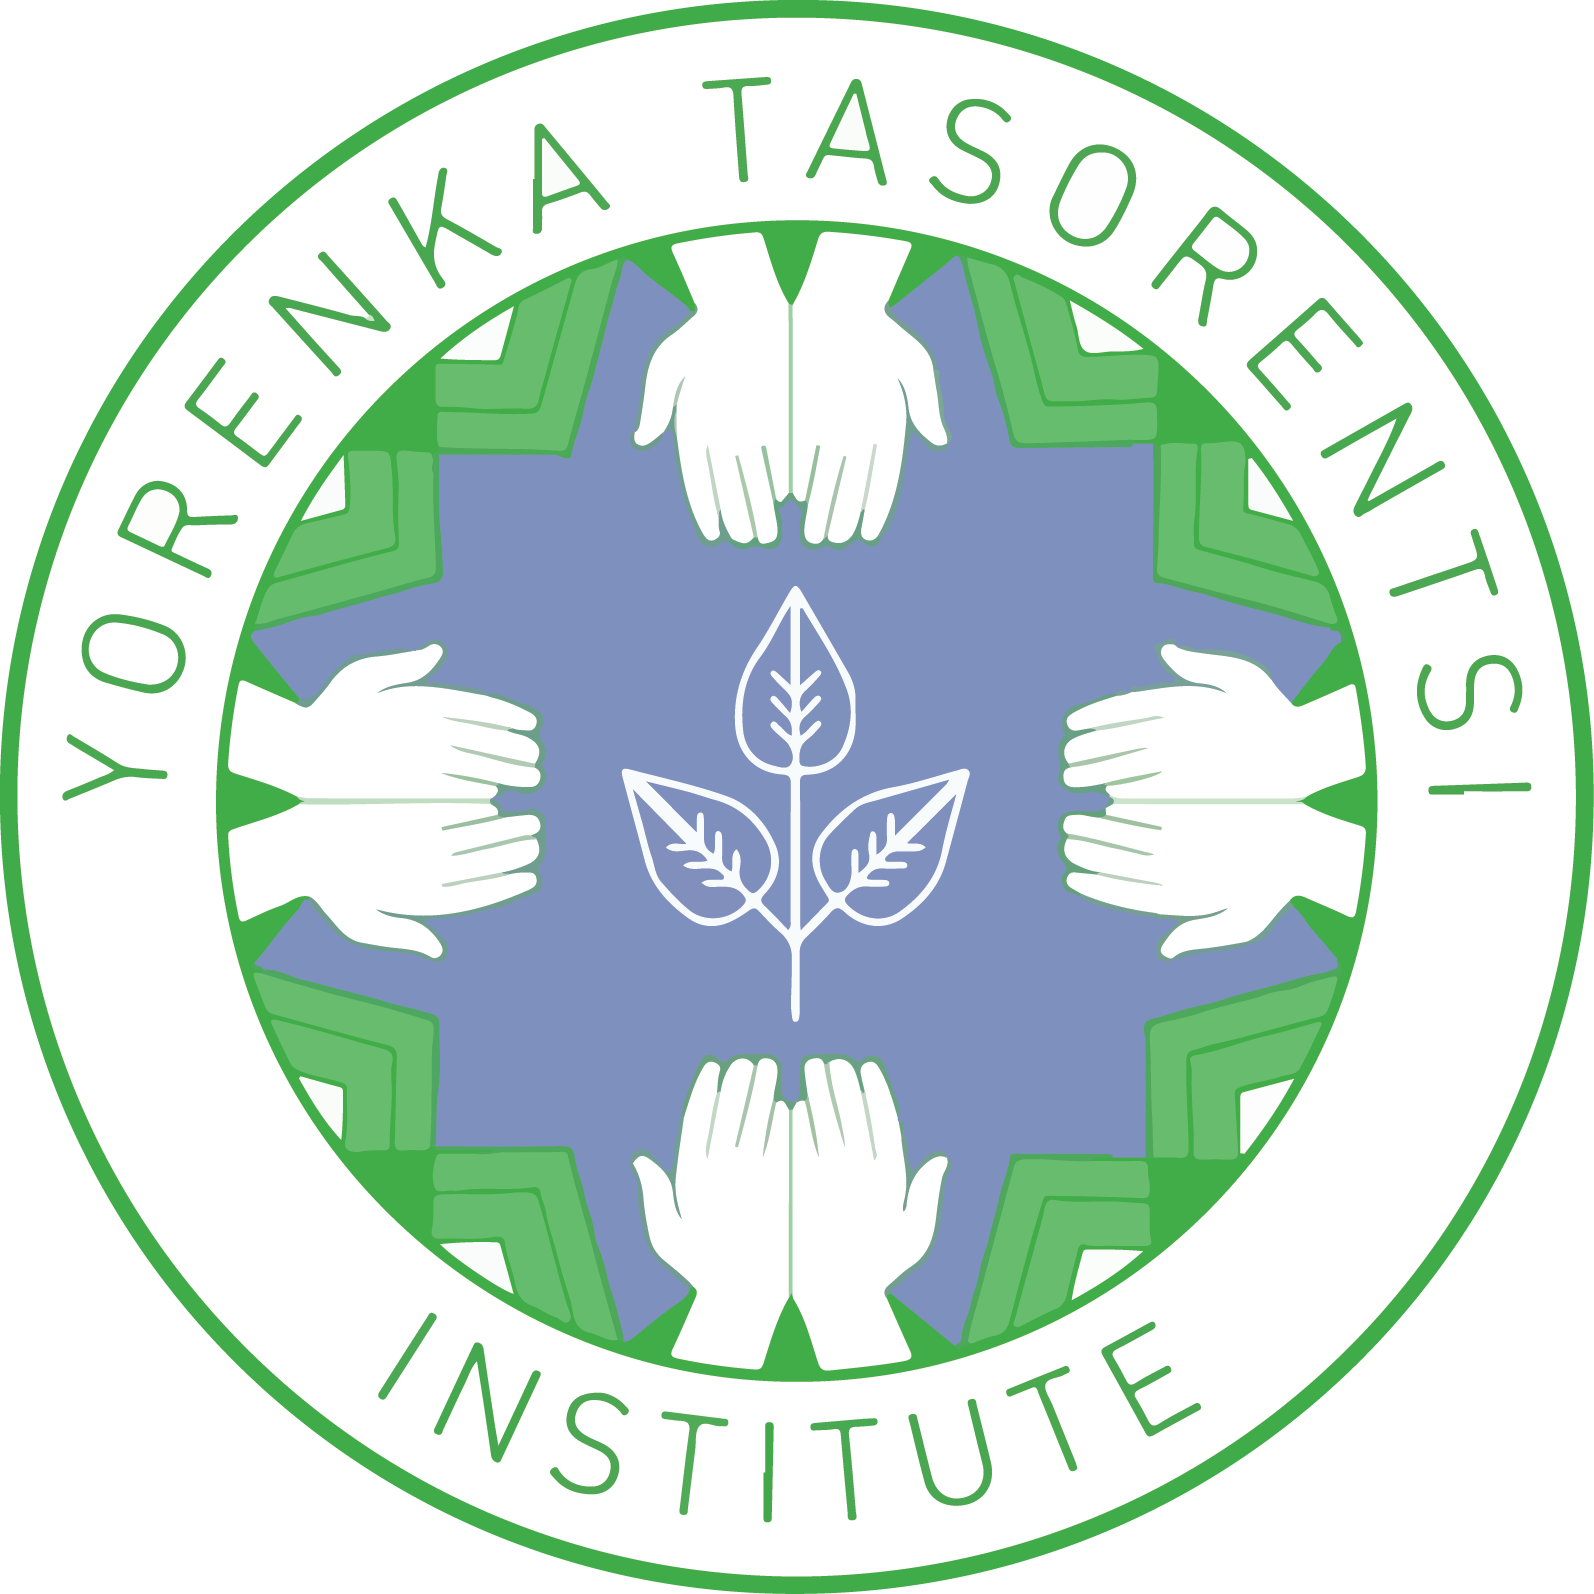 Yorenka Tasorentsi